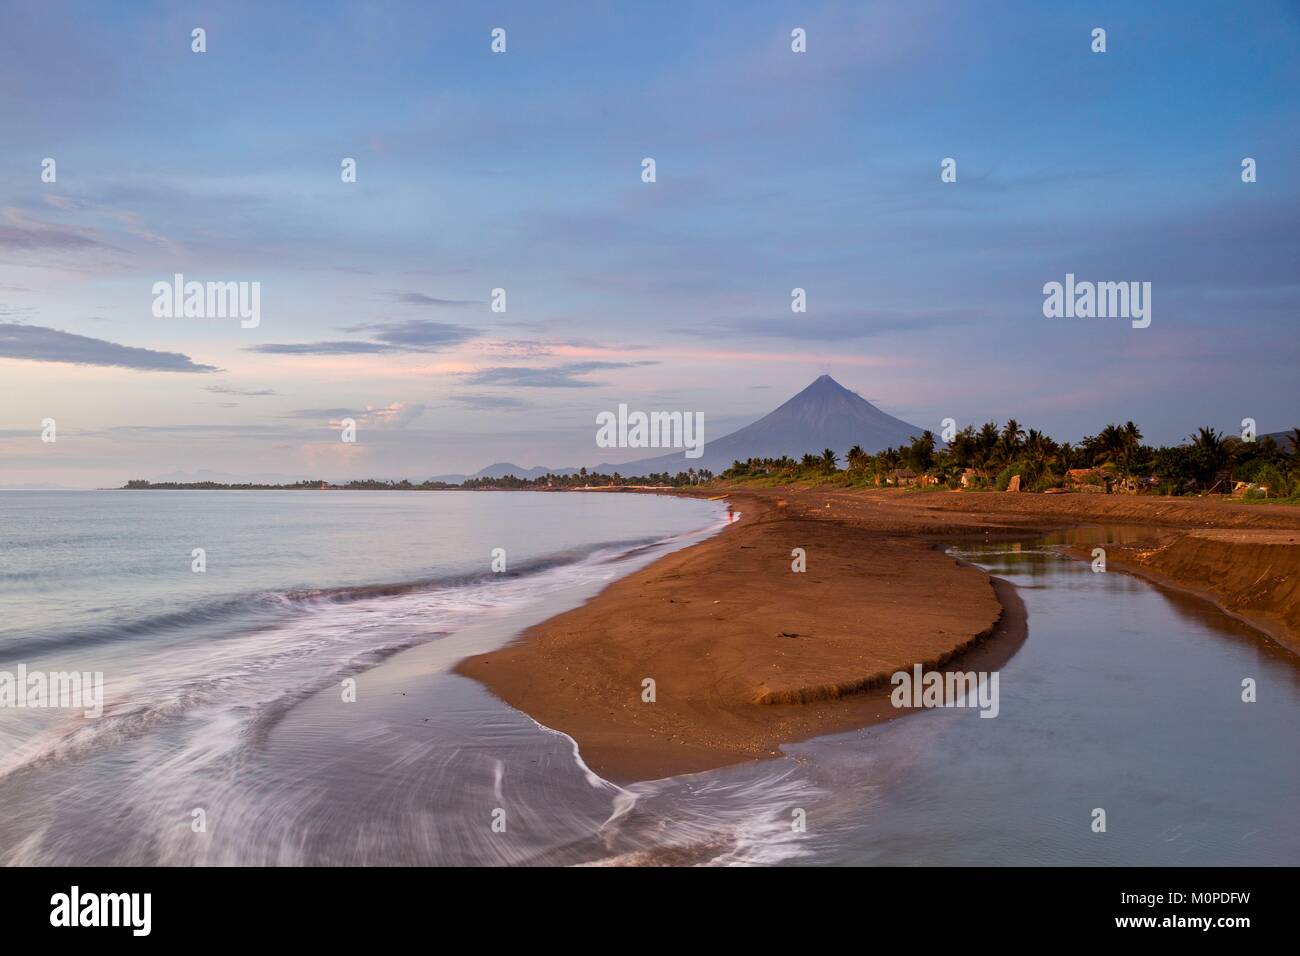 Philippinen, Luzon, Provinz Albay, Tiwi, Sonnenaufgang am Strand mit Mayon Vulkan in Boden zurück Stockfoto